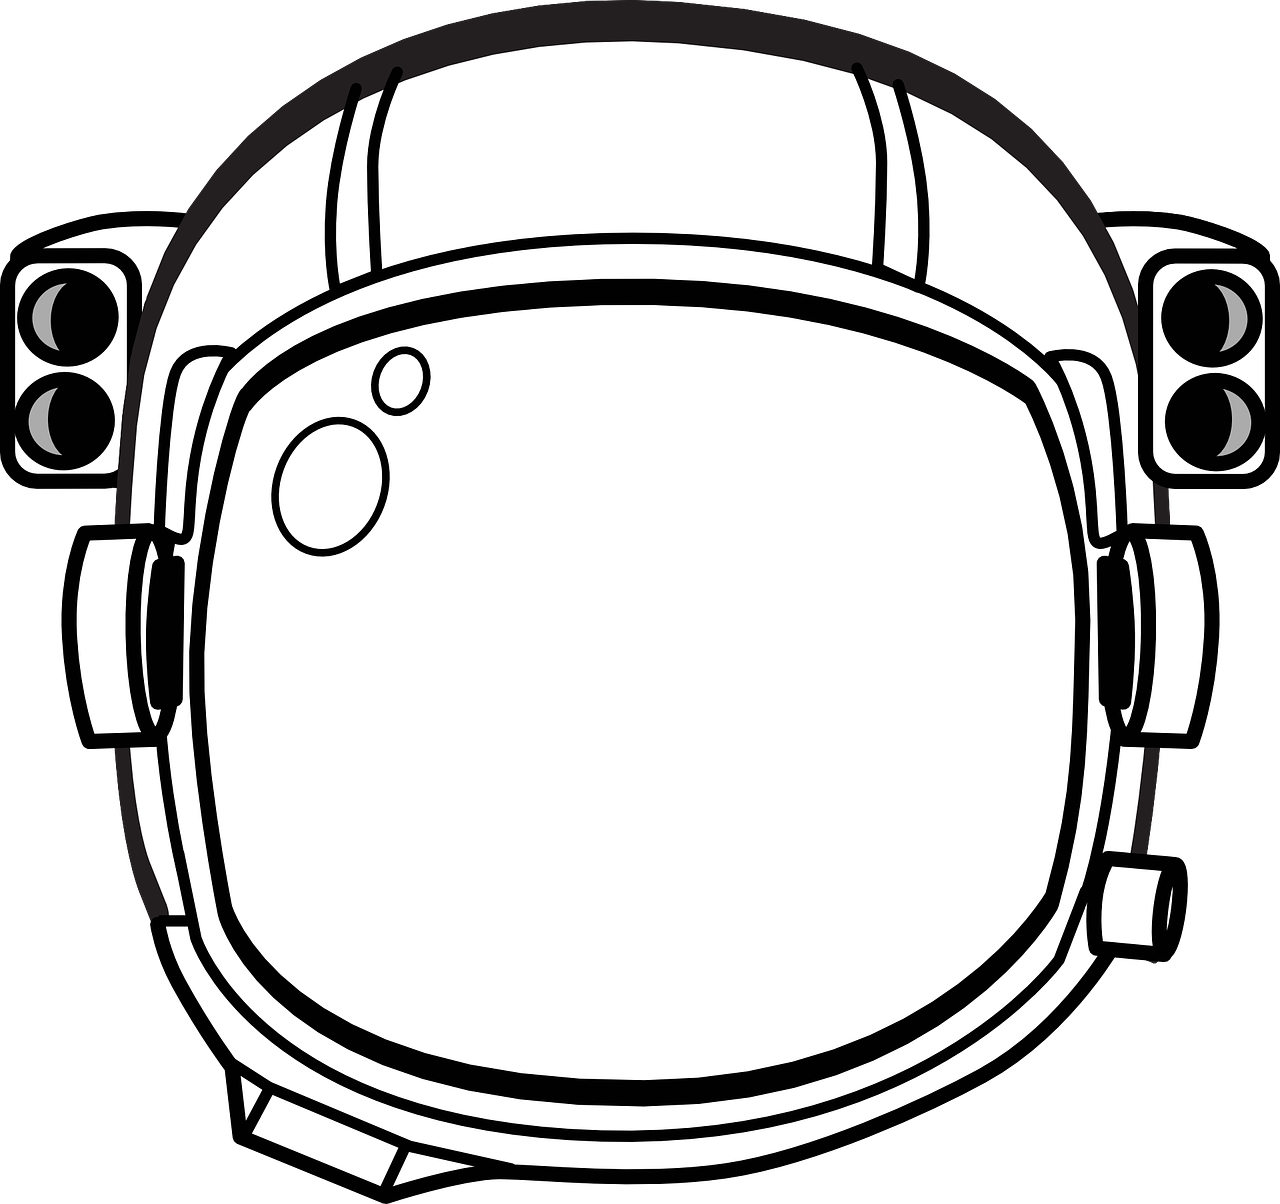 edit-free-photo-of-astronaut-helmet-headgear-protection-free-vector